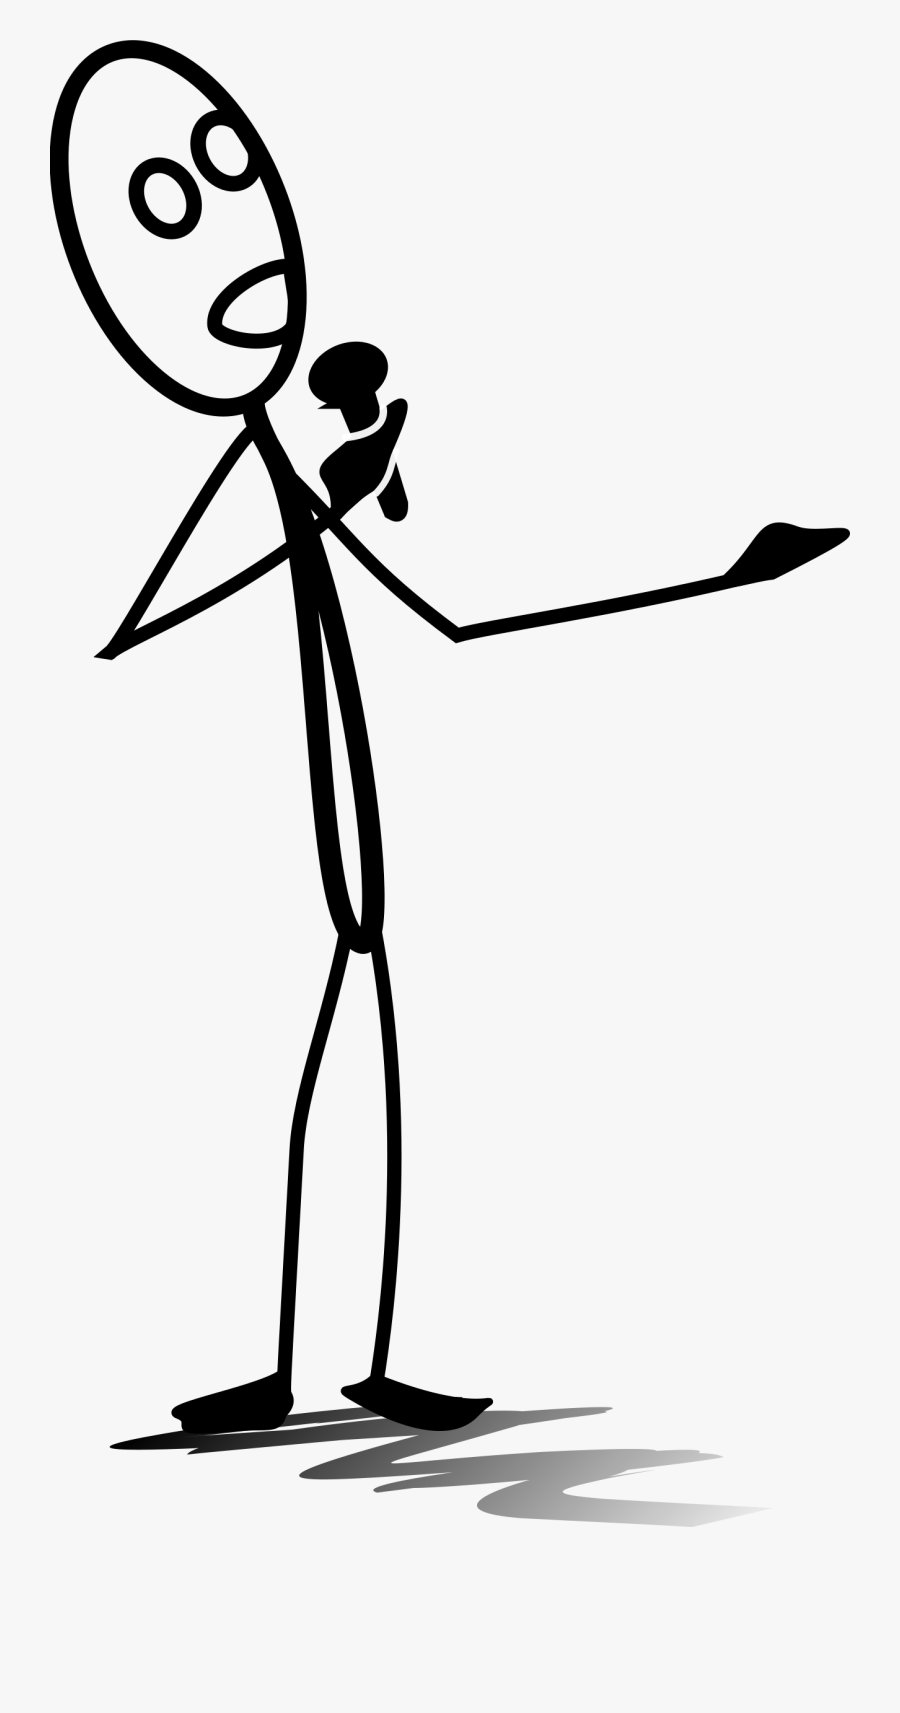 Cyber Clipart Stick Figure - Singing Stick Figure Gif, Transparent Clipart